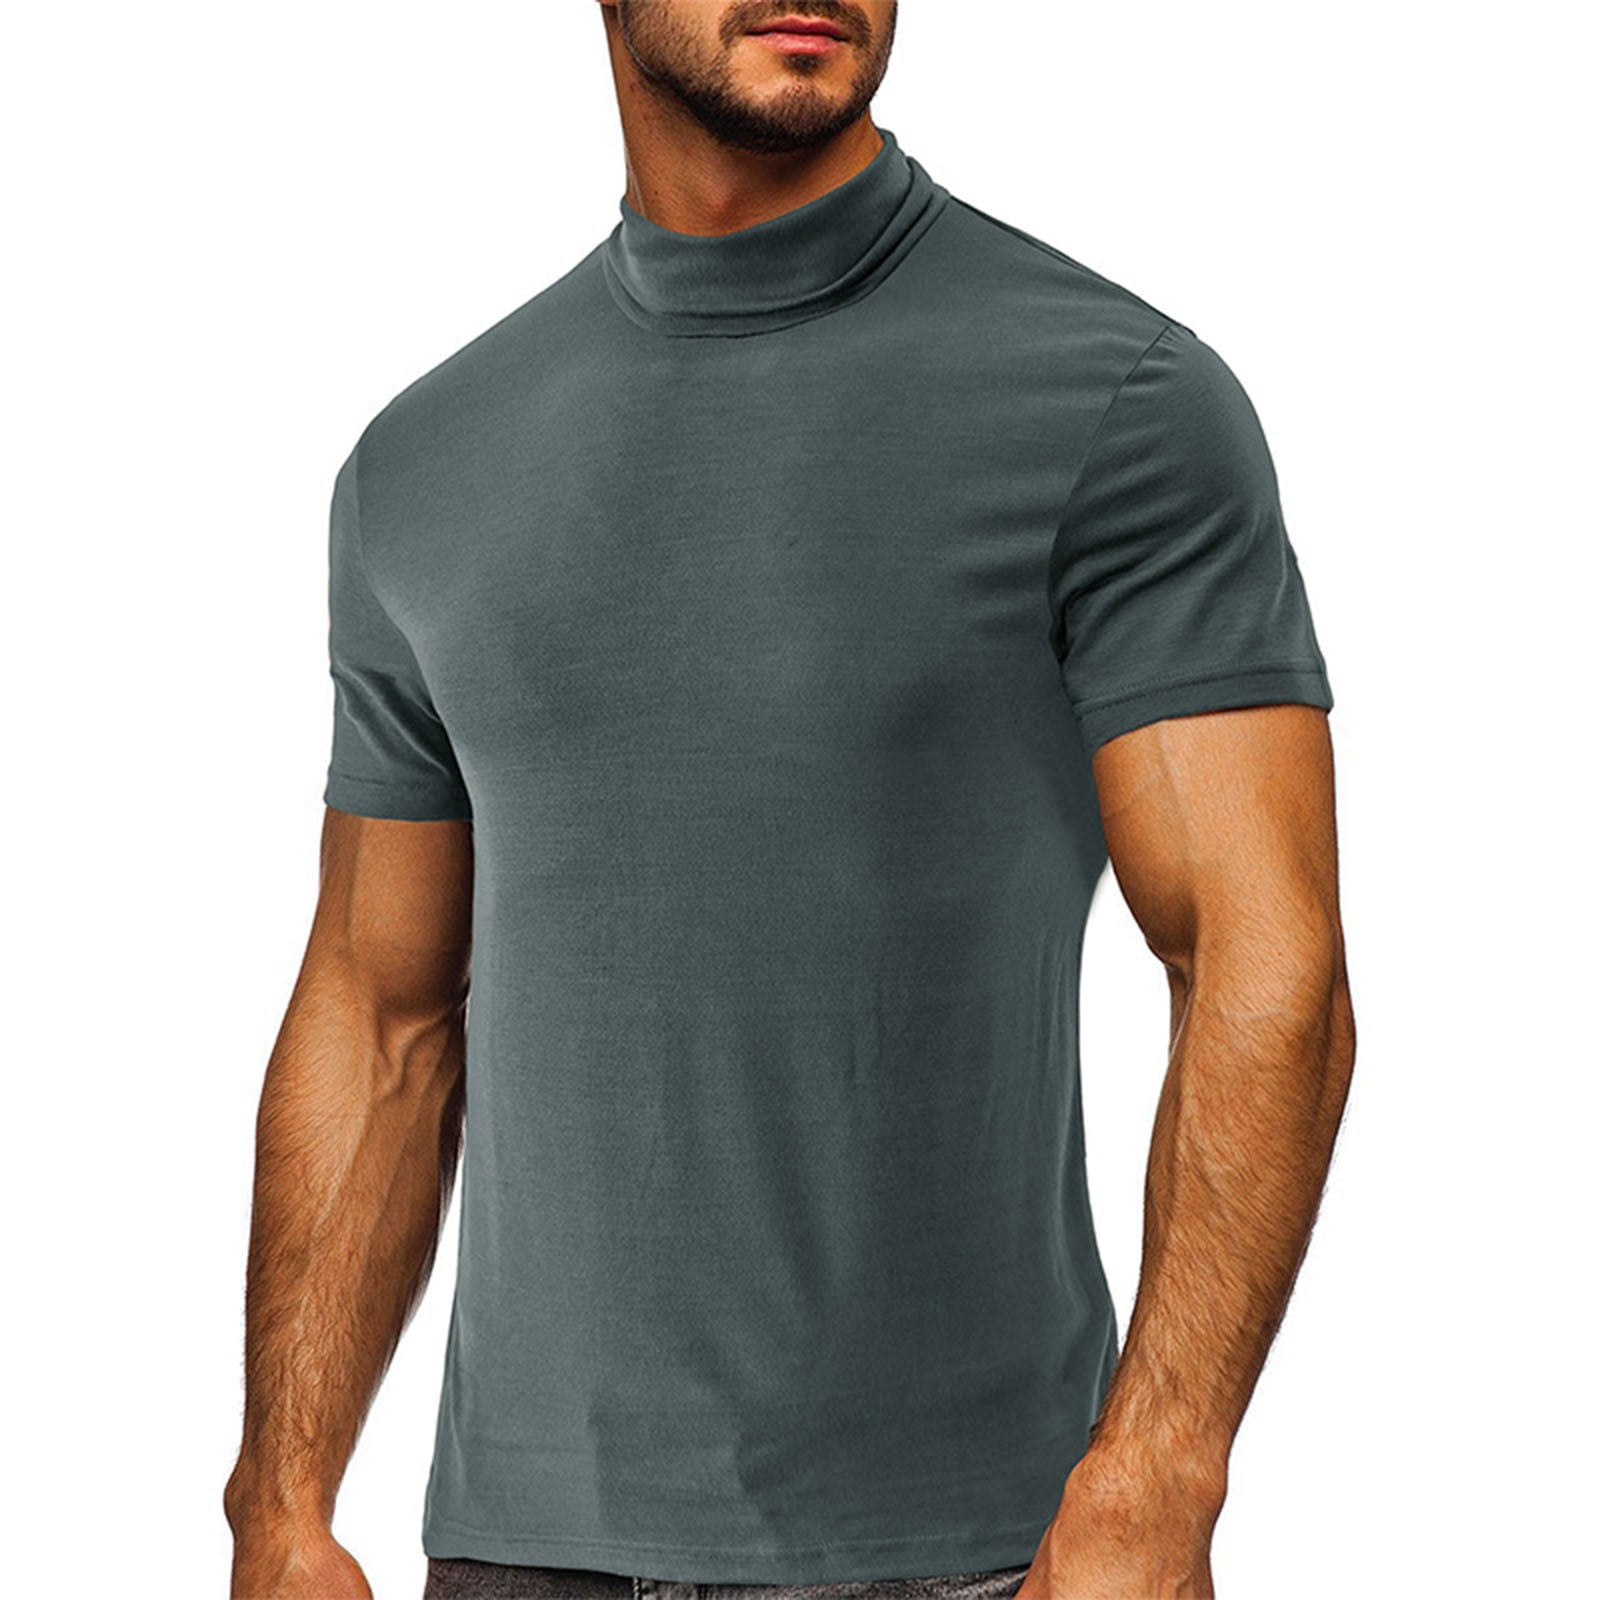 YYDGH Mens Mock Turtleneck T Shirts Short Sleeve Solid Color Shirts ...